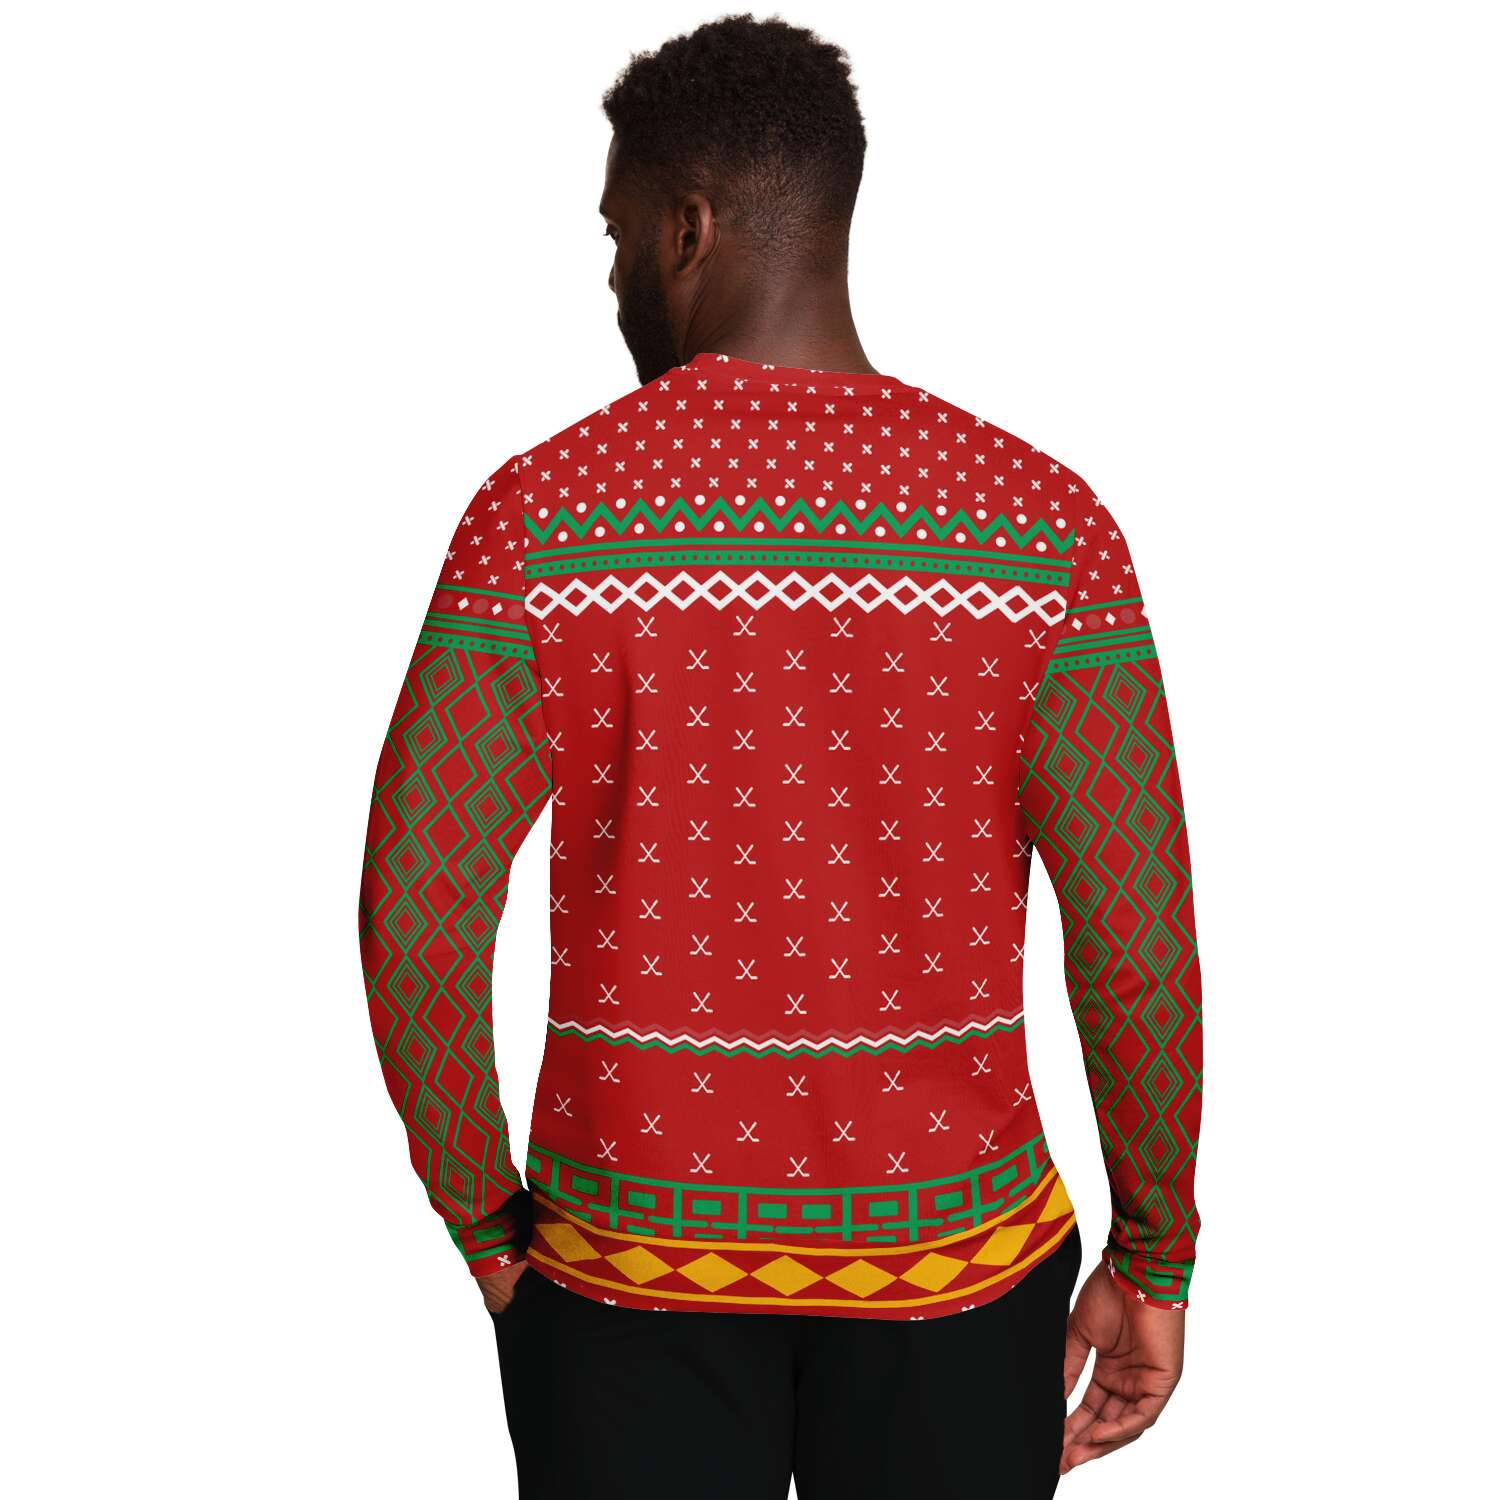 Happy Hockeydays Ugly Christmas Sweatshirt Fashion Sweatshirt - AOP Subliminator 